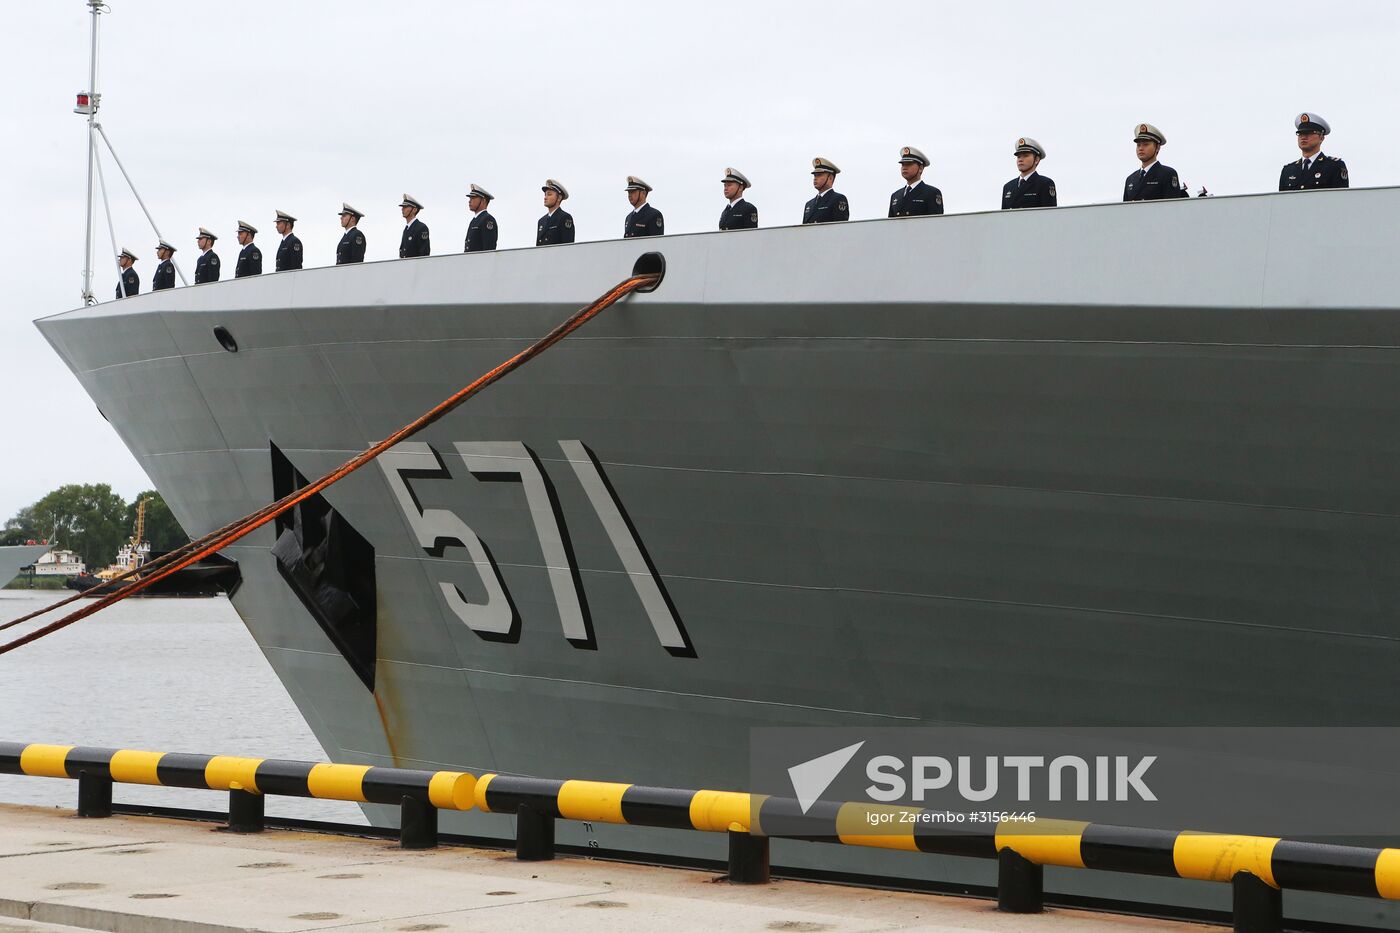 Three Chinese Navy ships arrive in Baltiysk